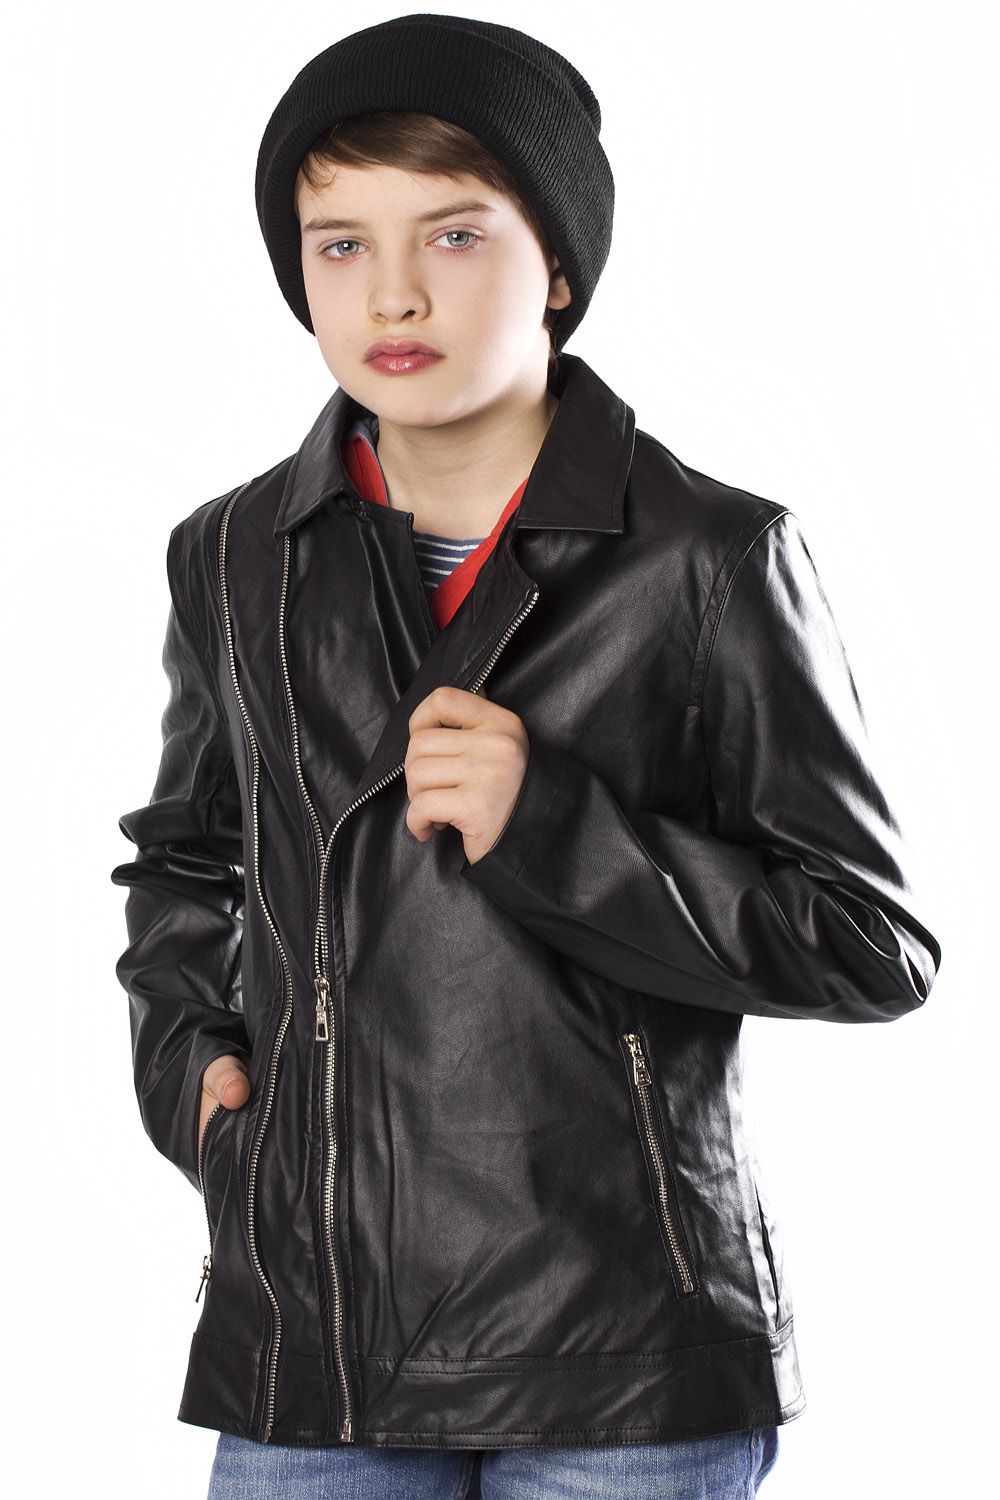 Куртка Street Gang, размер 128, цвет черный SG6484 - фото 1